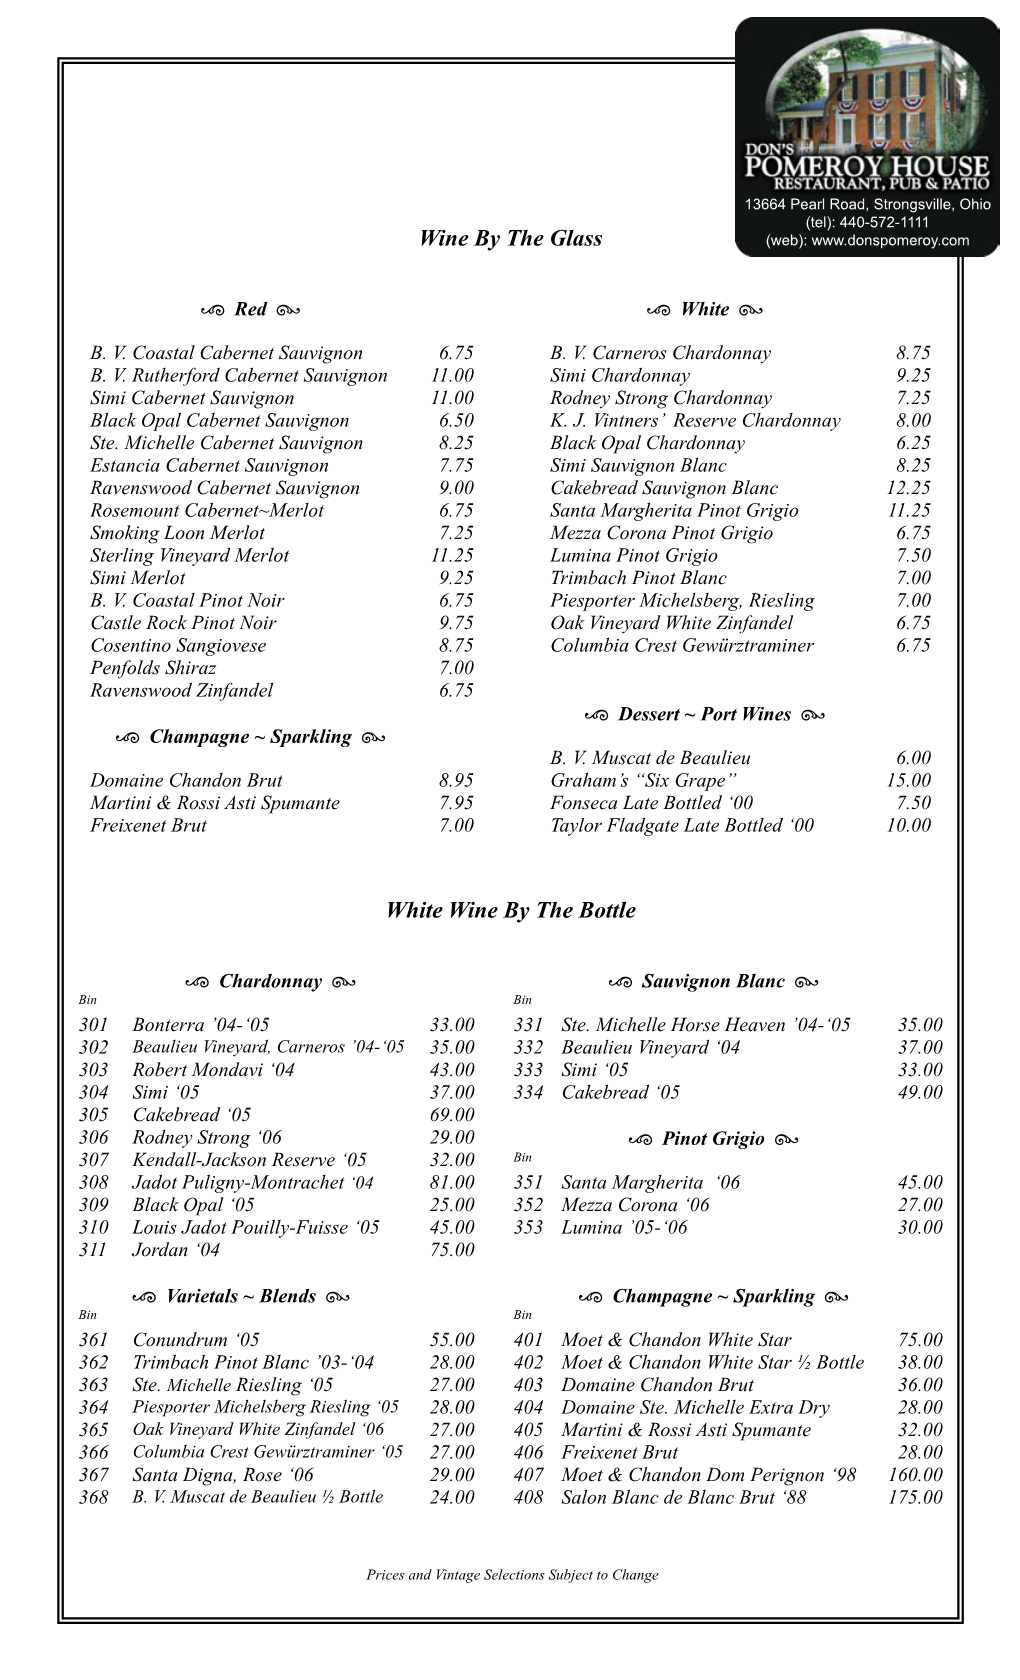 View Beer/Wine List